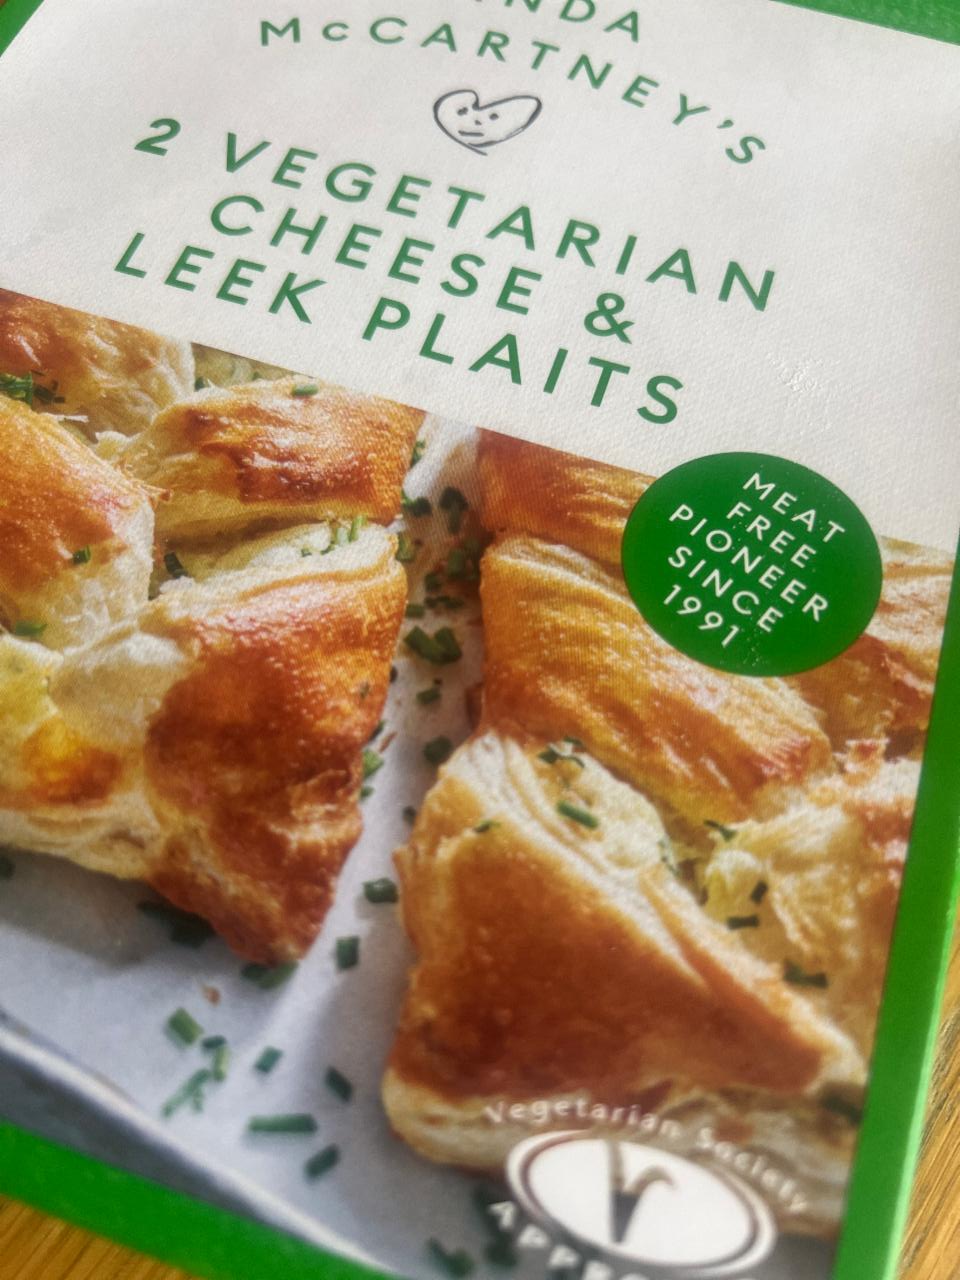 Fotografie - 2 Vegetarian Cheese & Leek Plaits Linda McCartney's